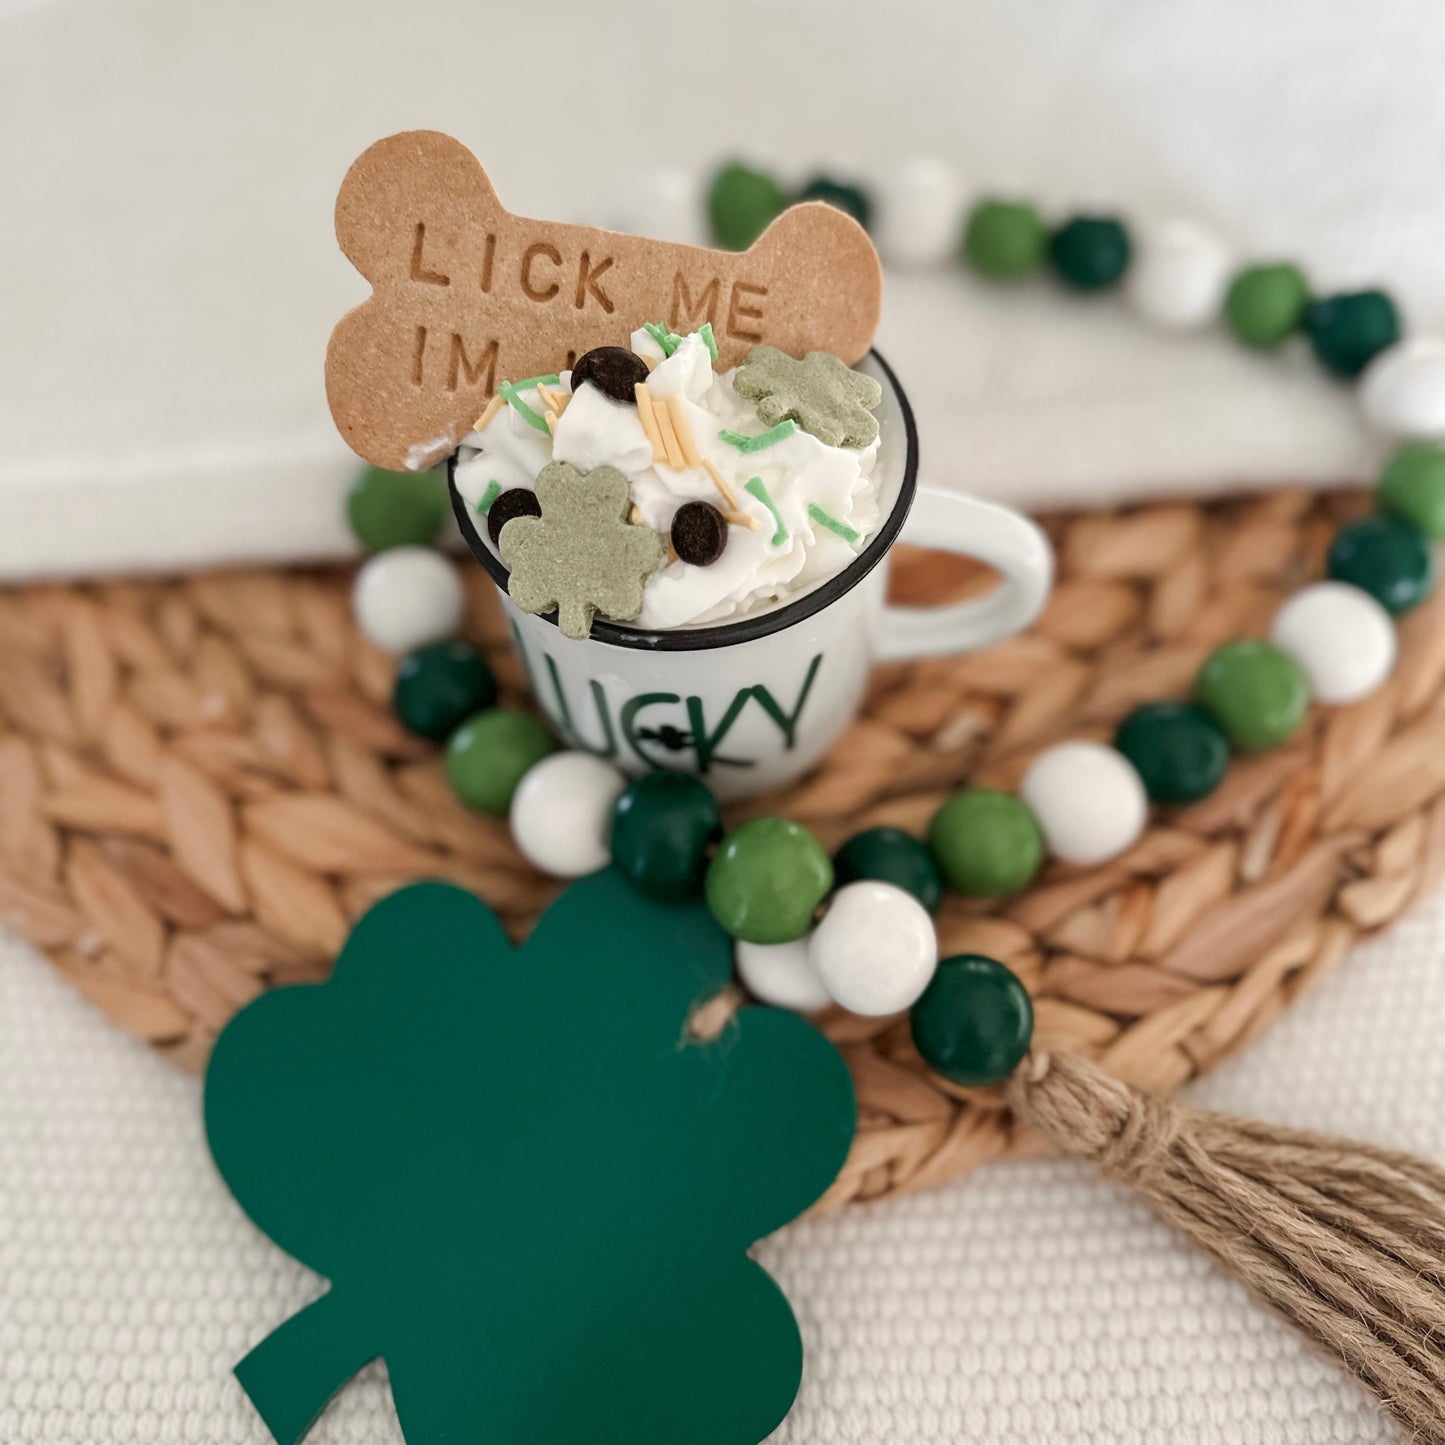 “Lick Me, I’m Irish” Pup Cup Kit